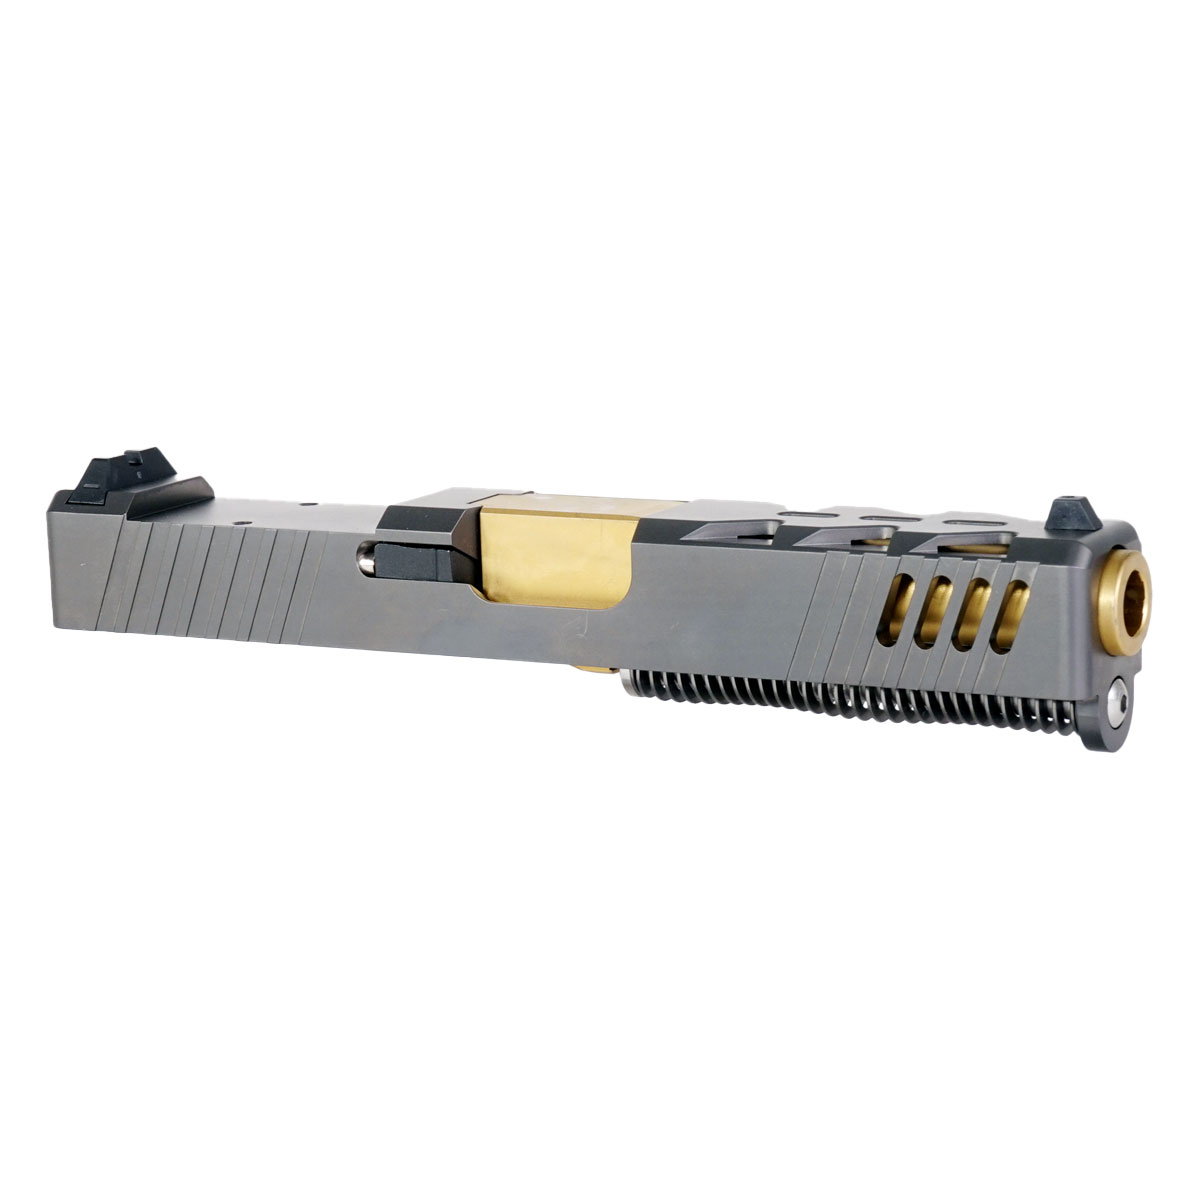 DTT 'The Talon' 9mm Complete Slide Kit - Glock 19 Gen 1-3 Compatible